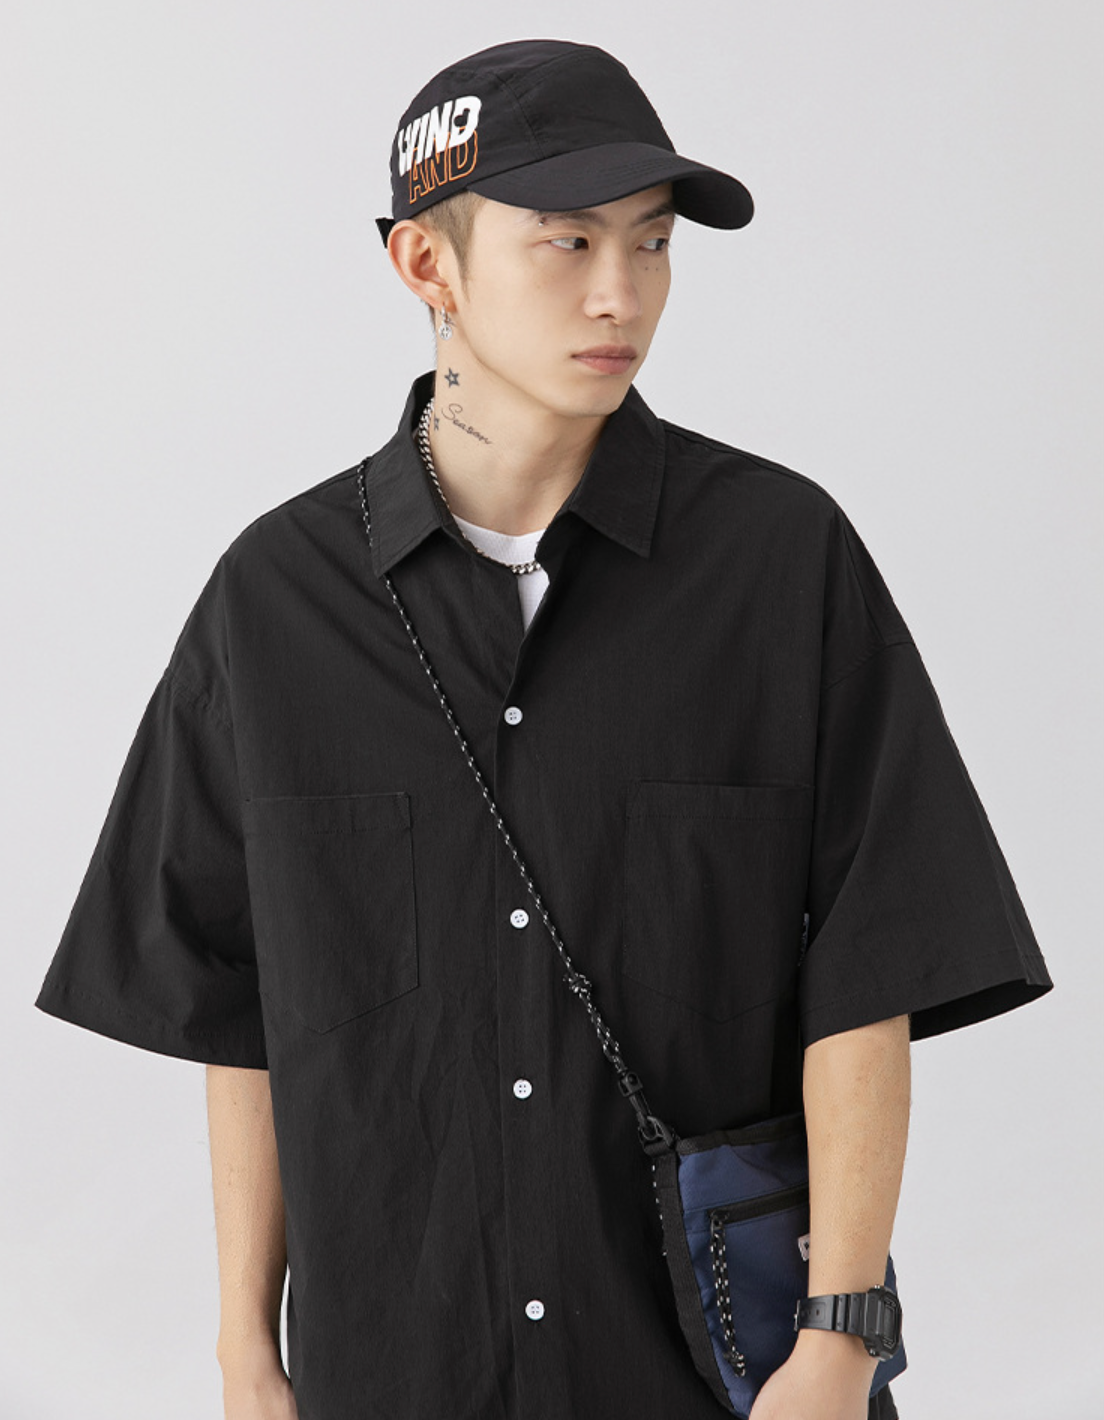 Urban Nylon Buttoned Shirt in Black